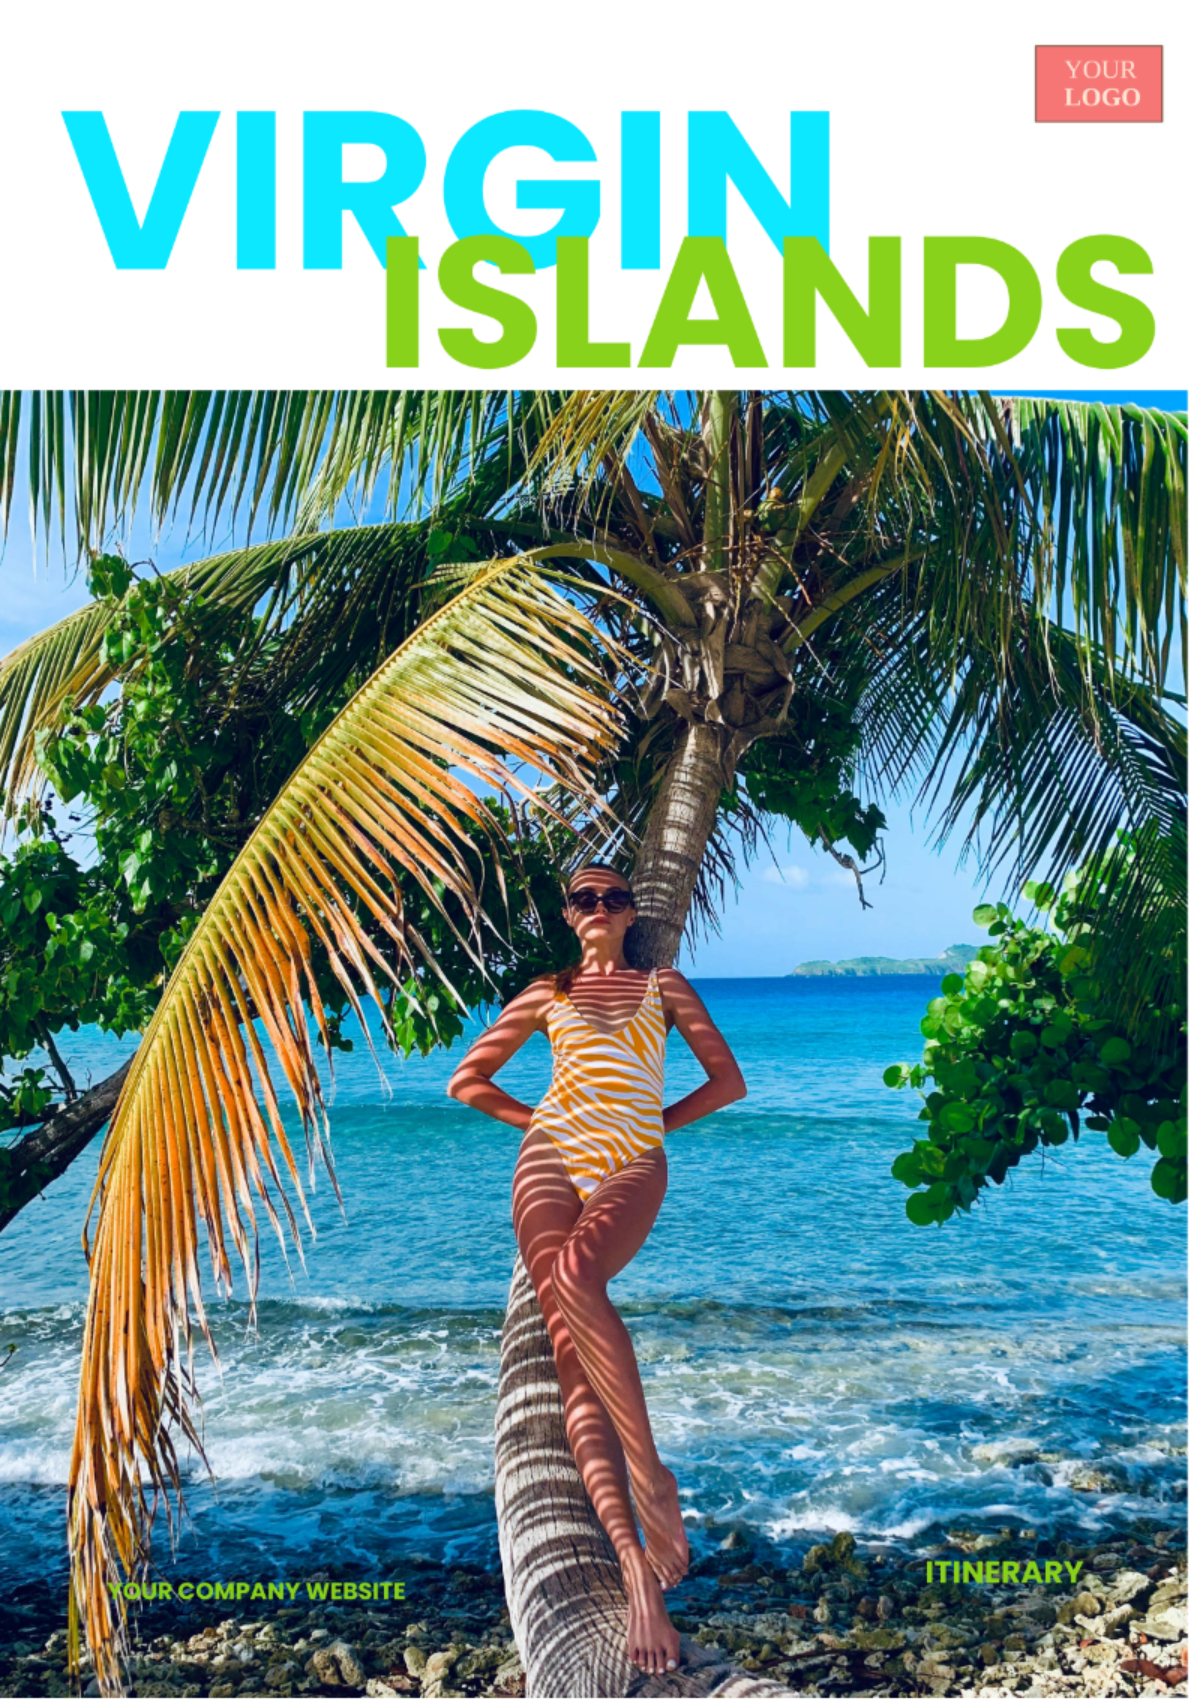 Virgin Islands Itinerary Template